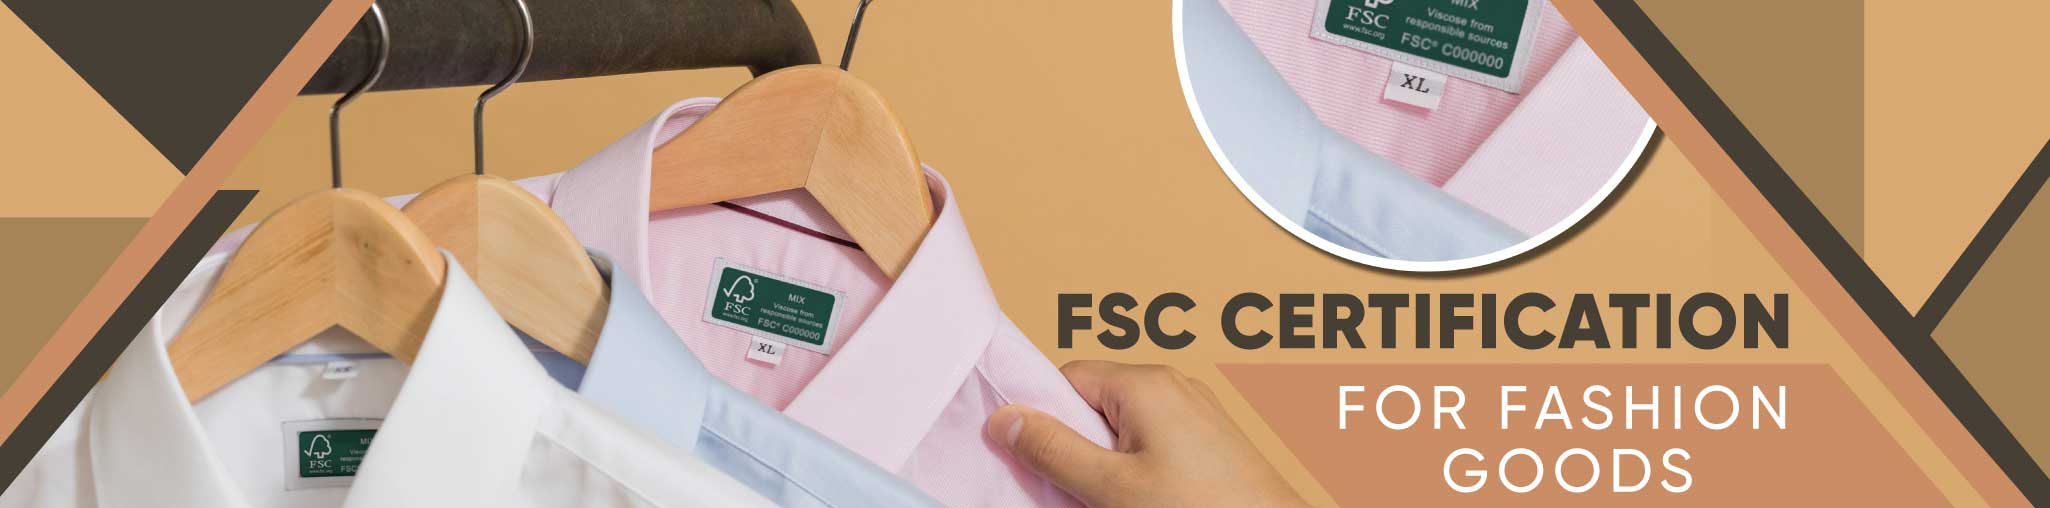 FSC Certification for Fashion Goods